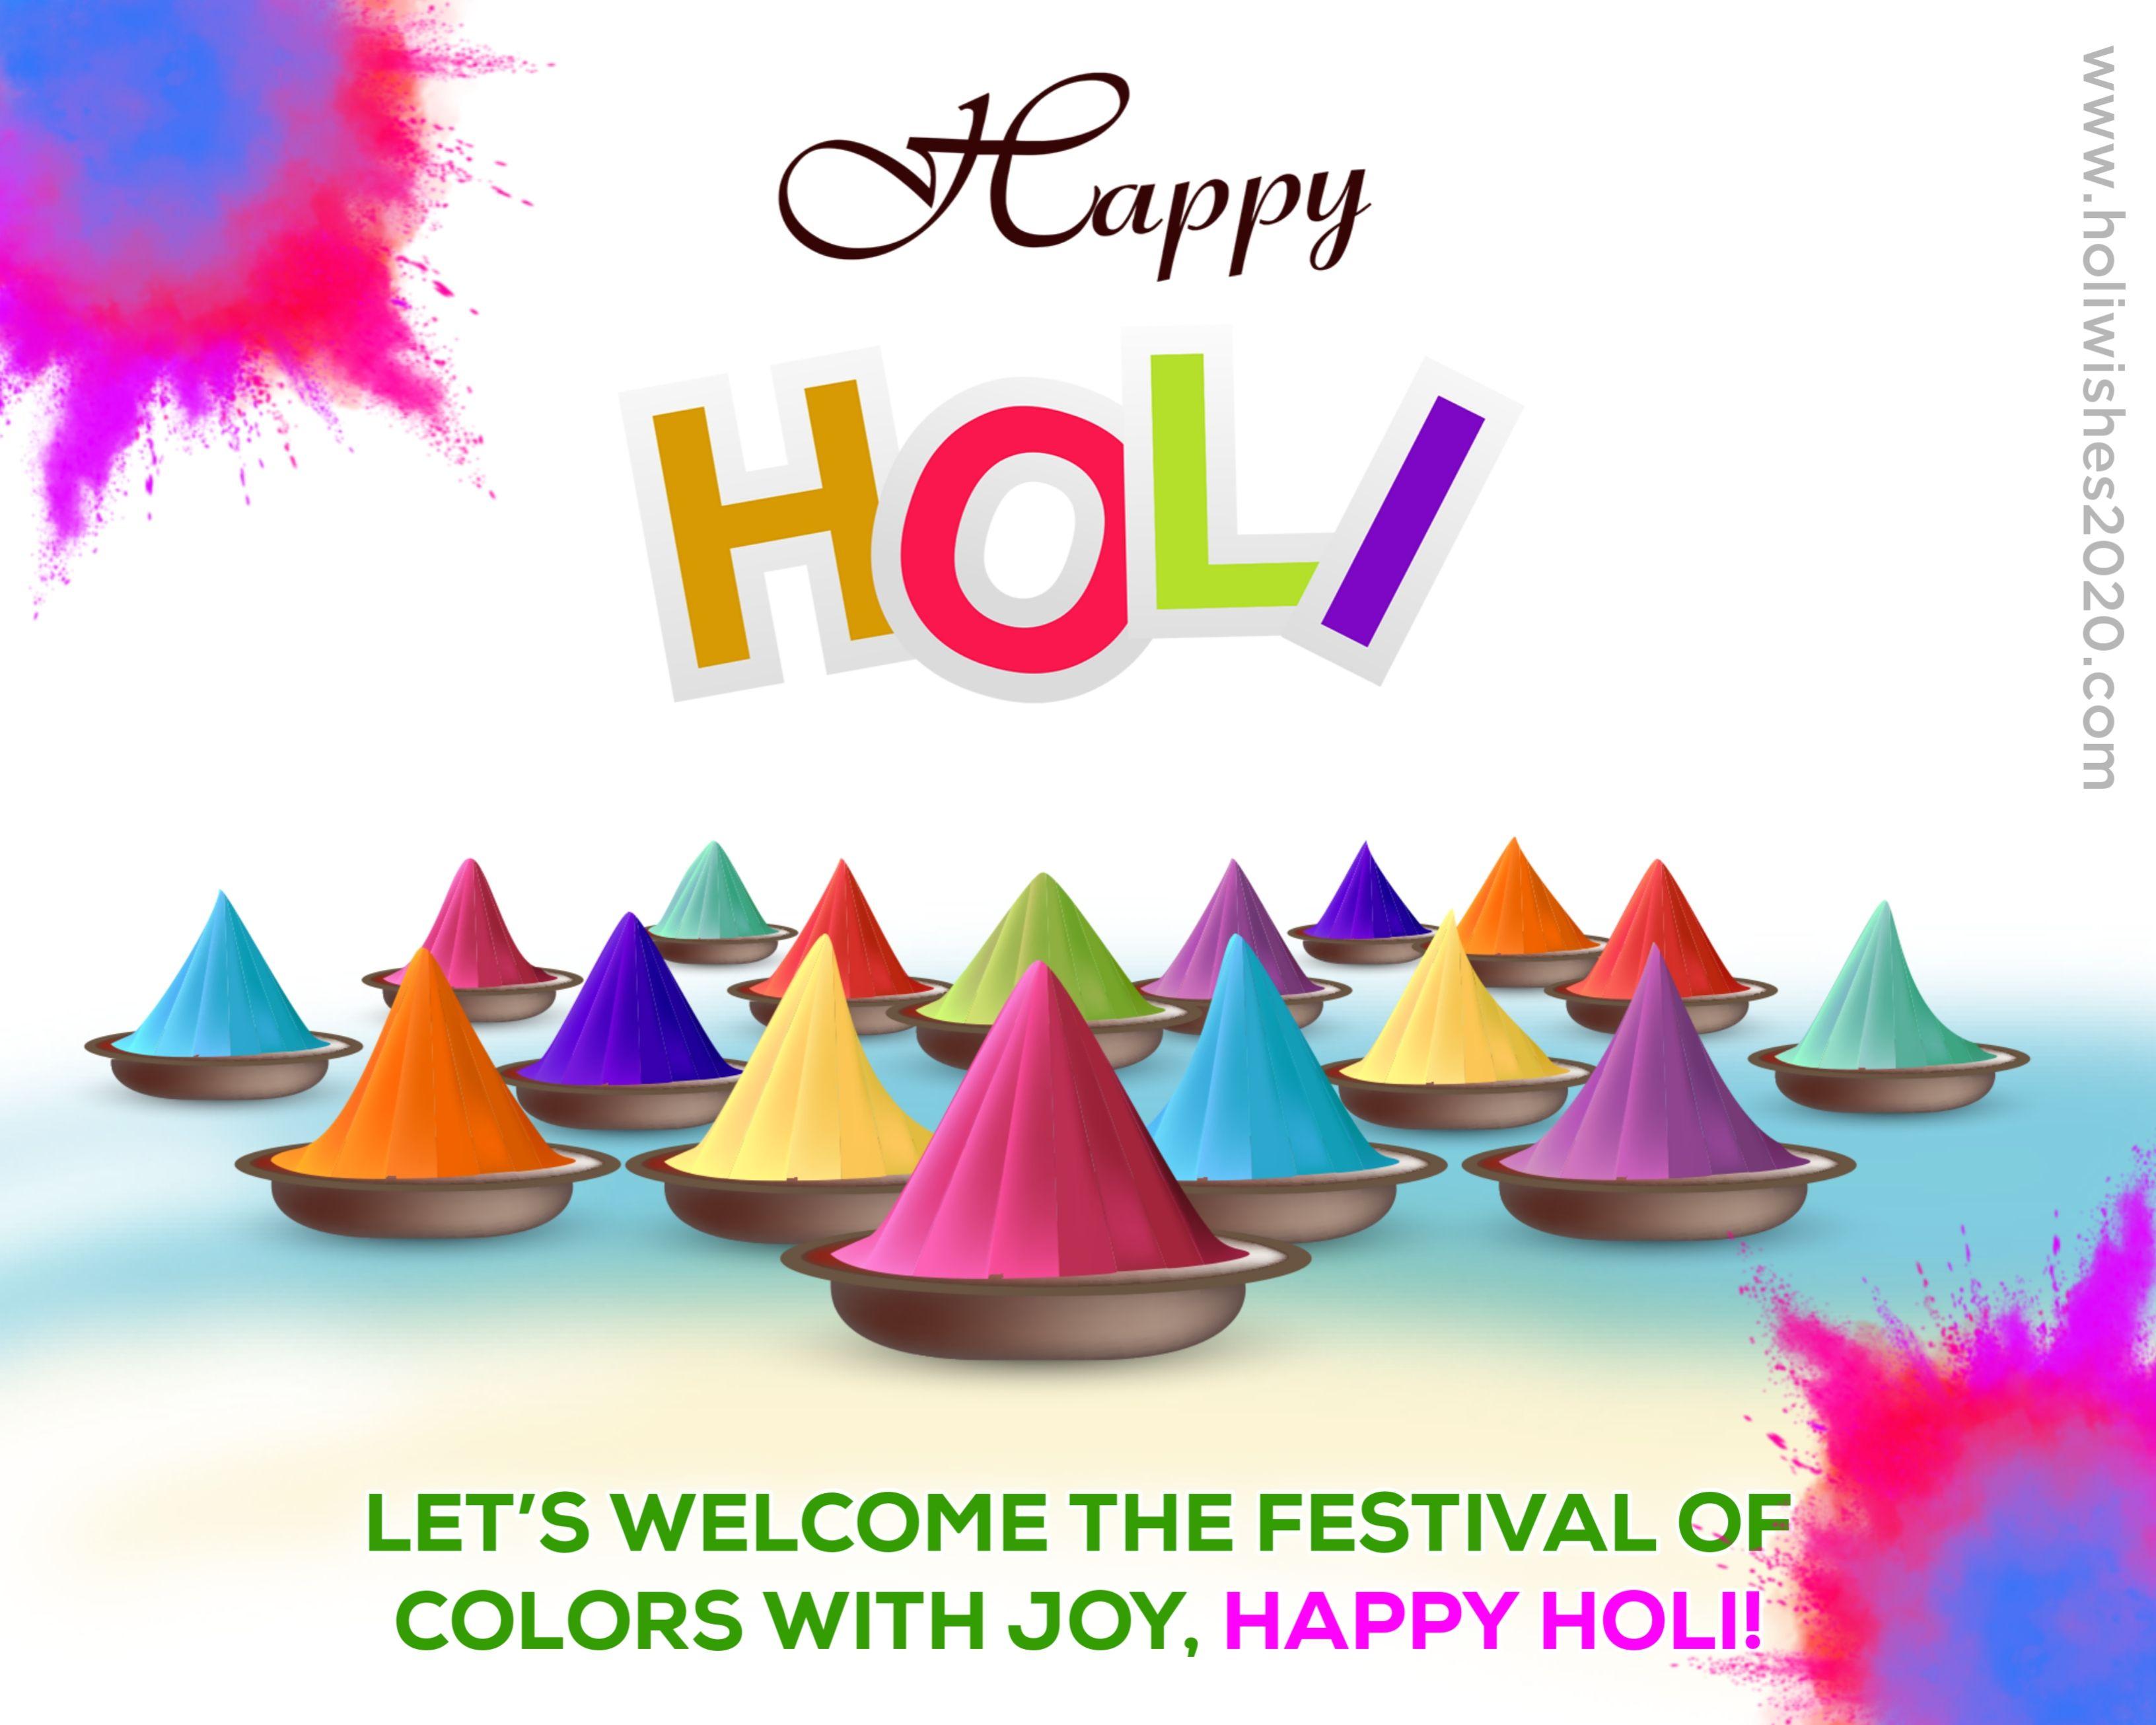 Happy Holi Wishes Images  Free Download on Freepik